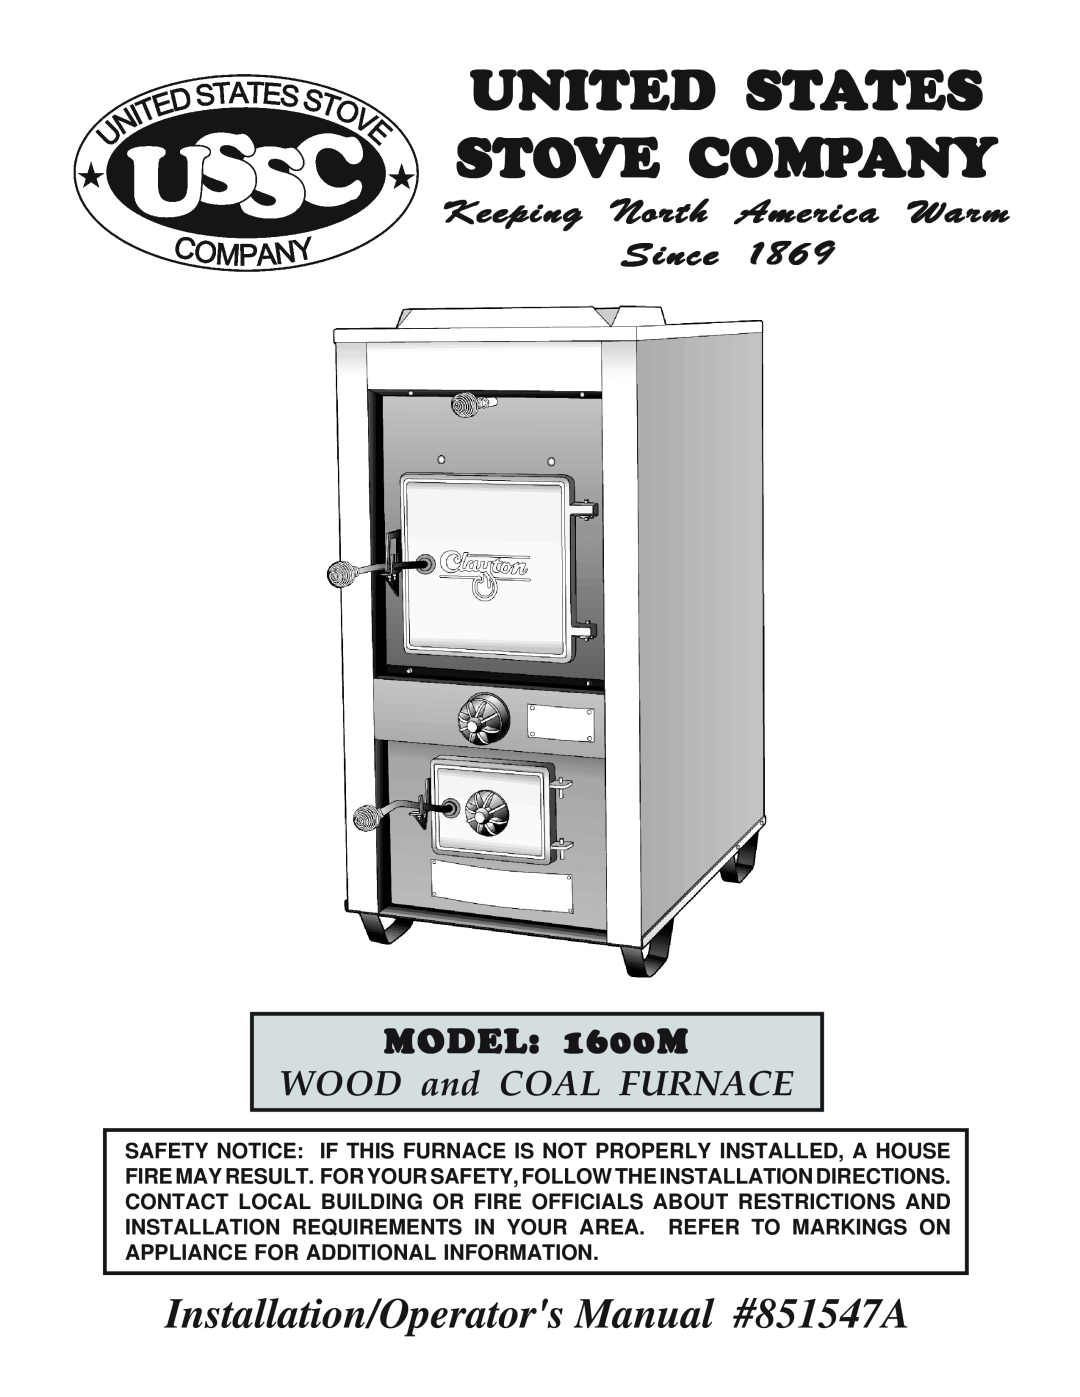 United States Stove manual United States Stove Company, Installation/Operators Manual #851547A, MODEL 1600M 